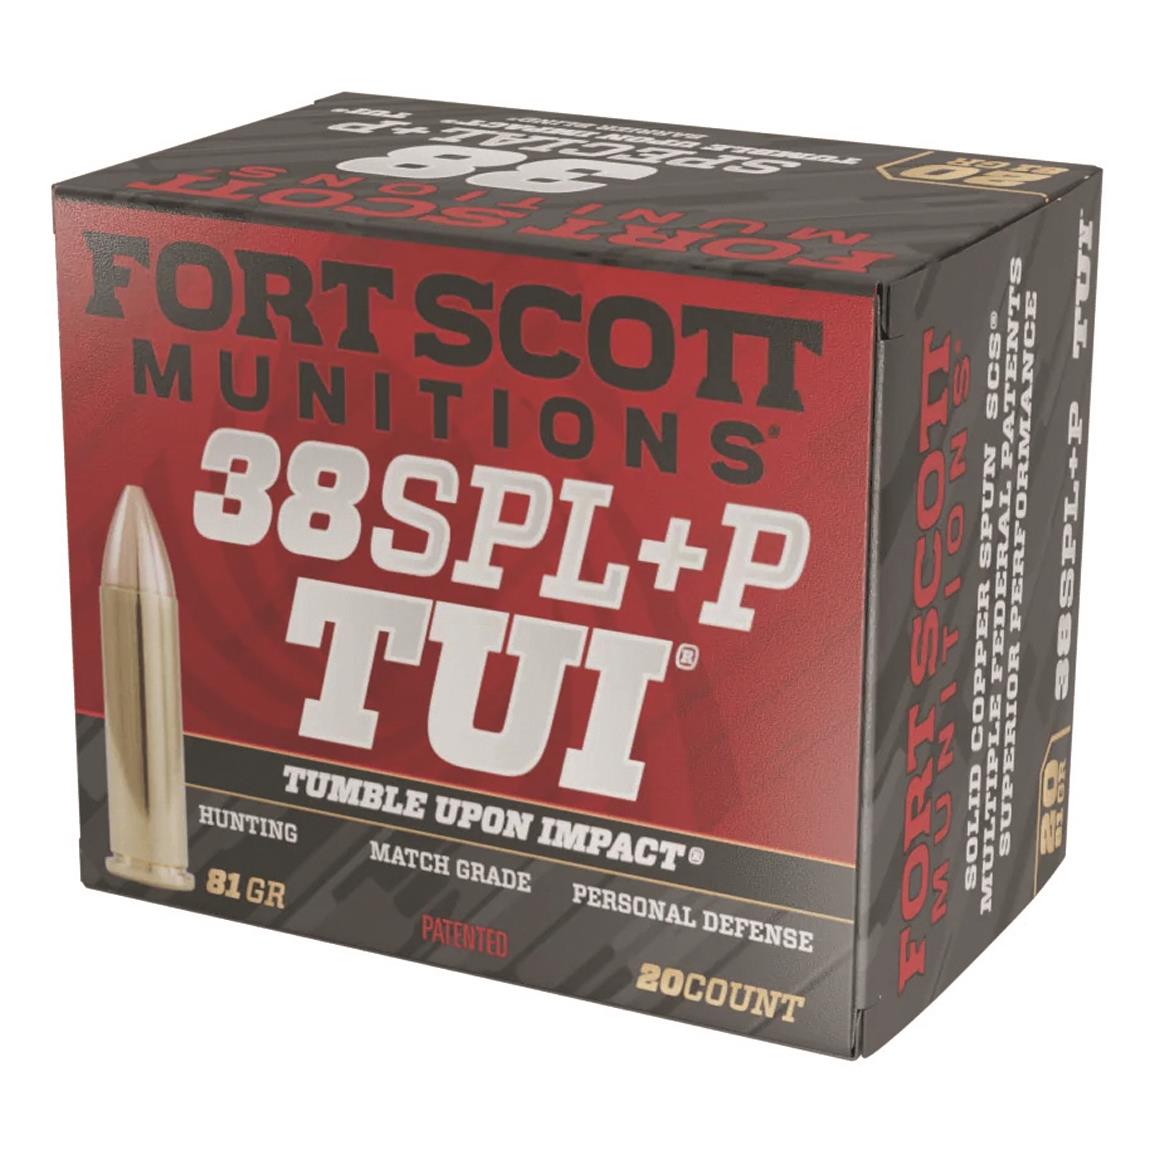 Fort Scott Tumble Upon Impact Ammo, .38 Special +P, SCS, 81 Grain, 20 Rounds